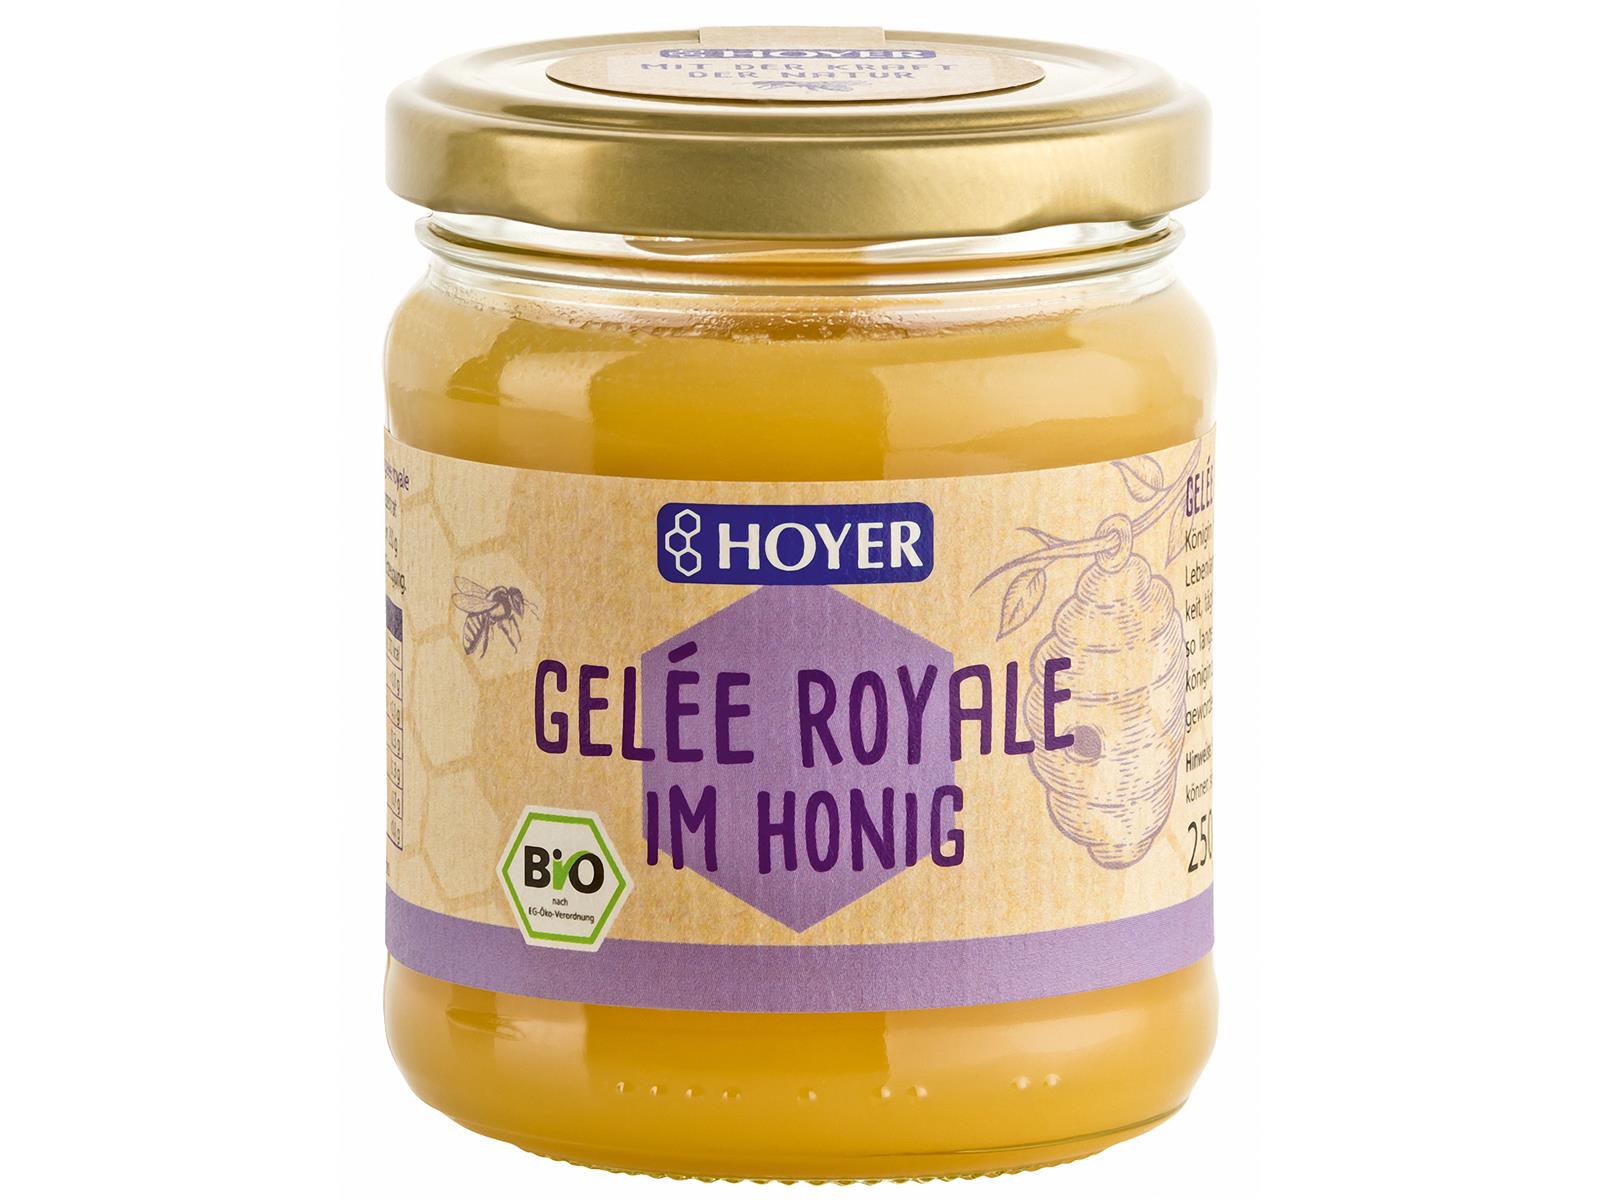 Hoyer Gelee Royale im Honig 250g